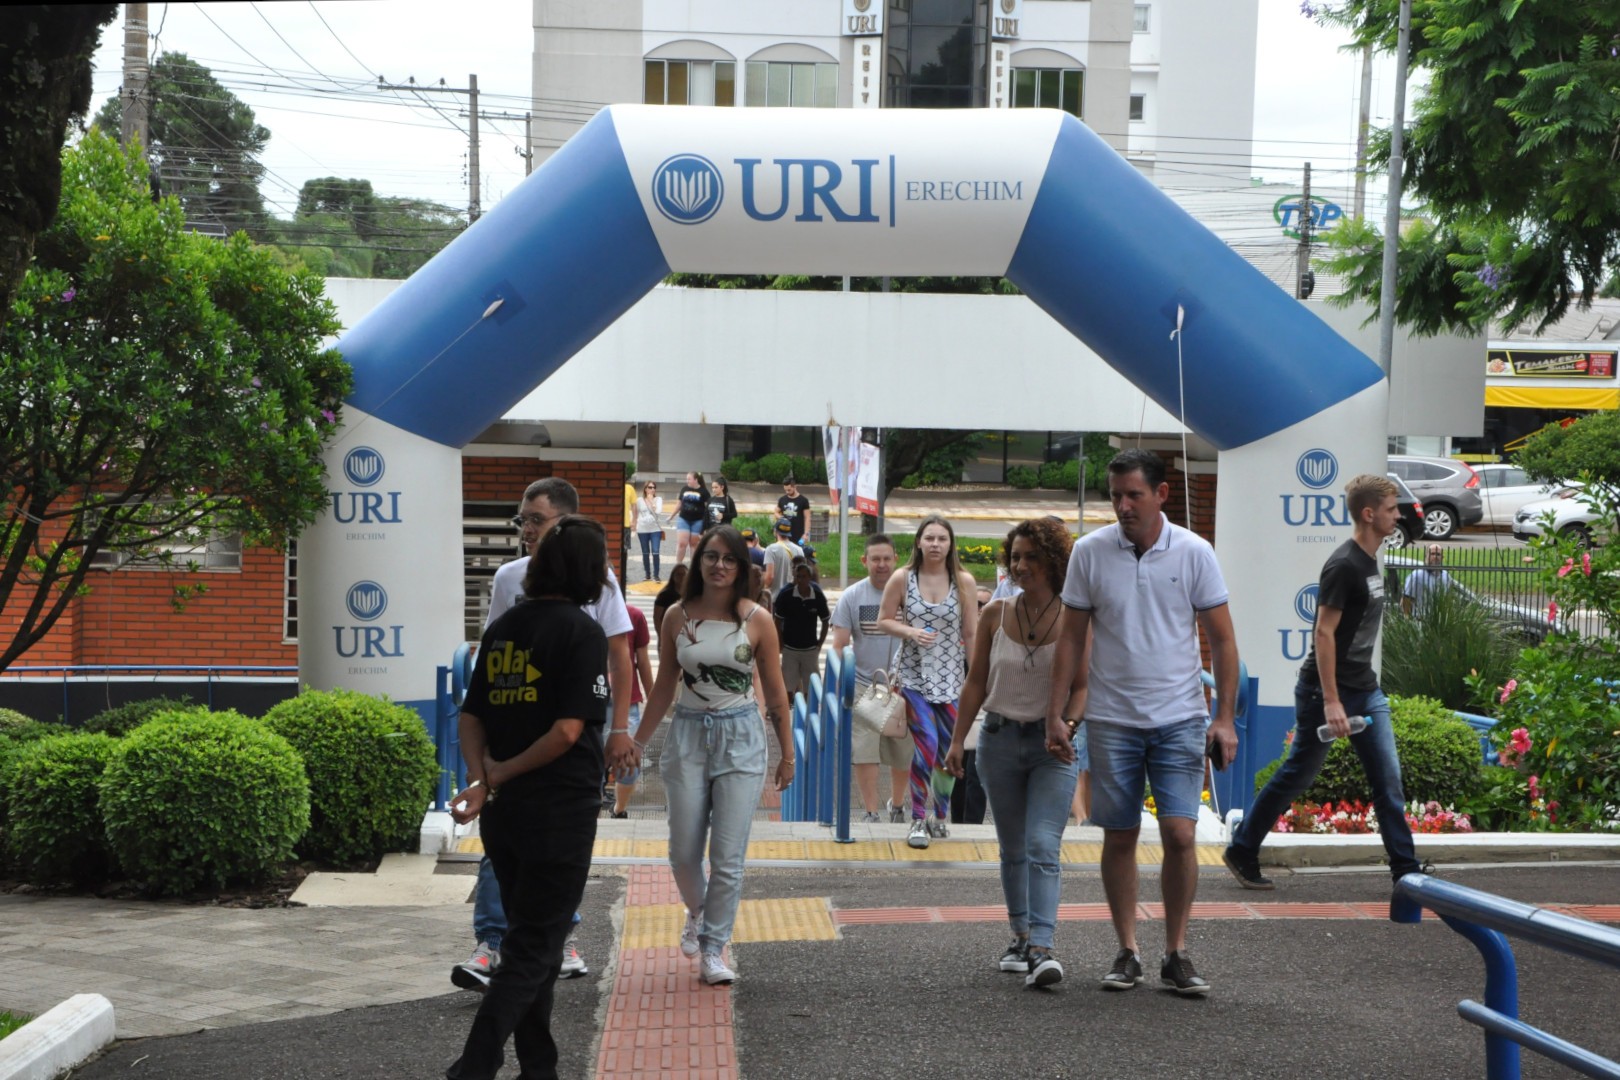 Universidade espera superar o número de candidatos do último vestibular realizado de forma presencial (foto Vestibular 2019)